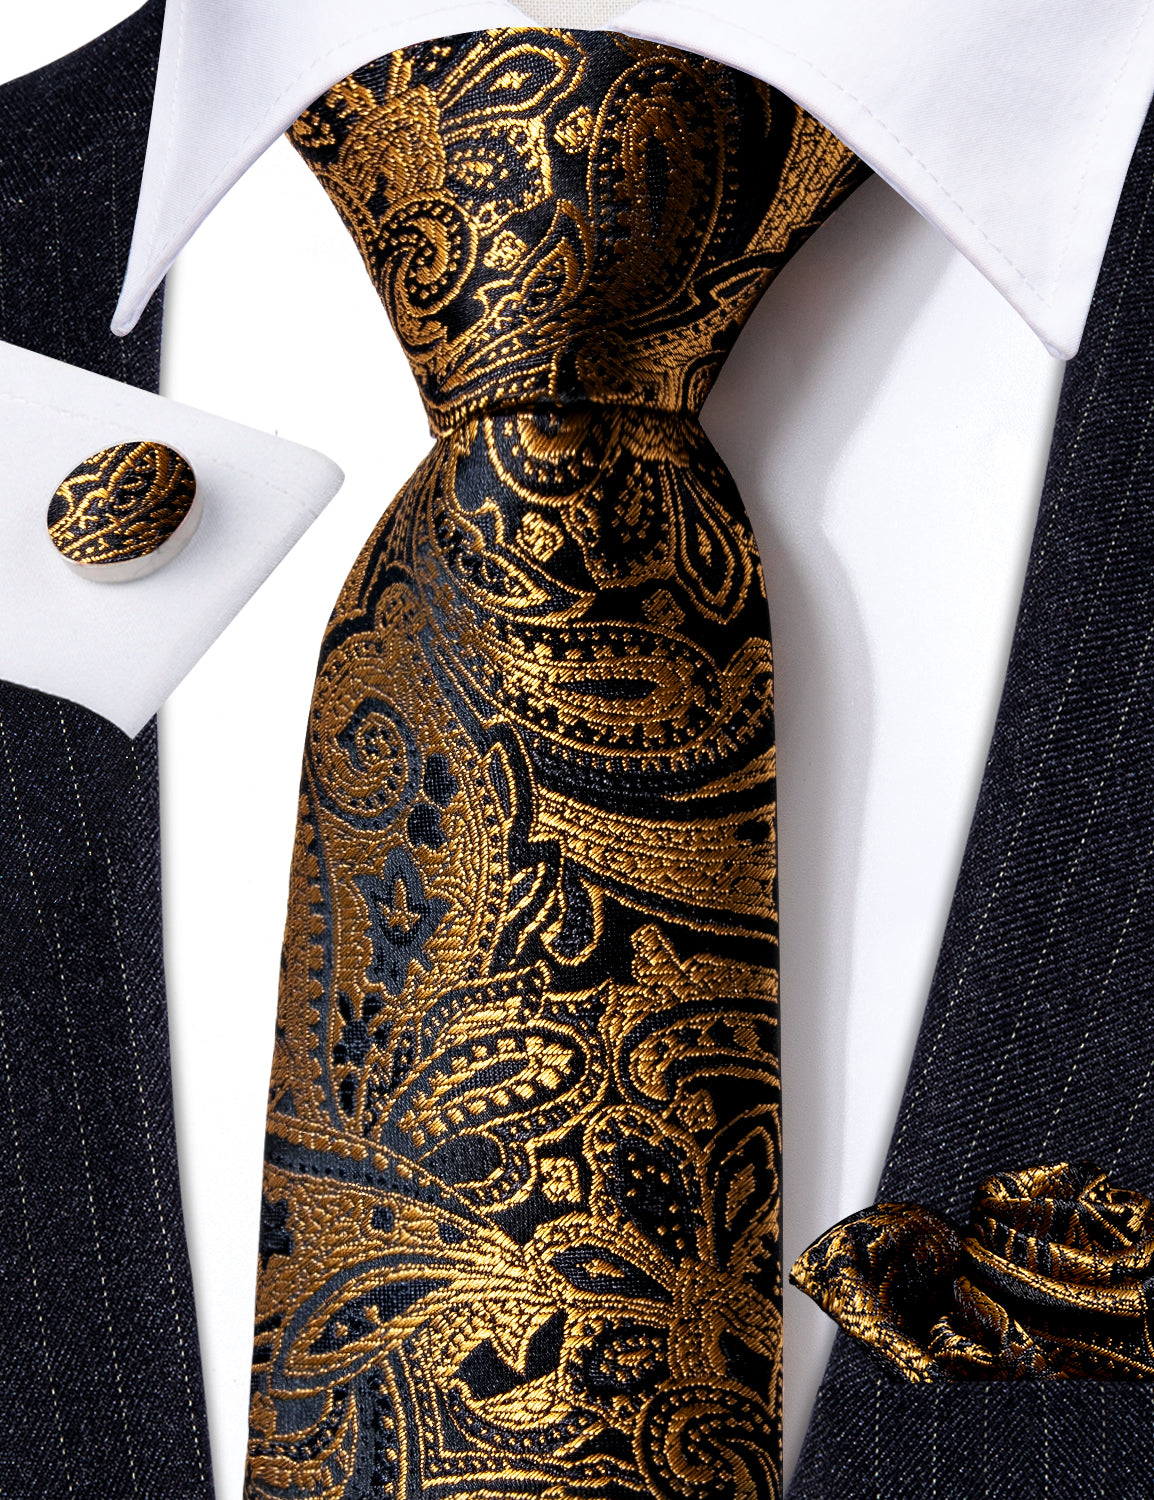 Barry.wang Black Tie Gold  Paisley Silk Tie Pocket Square Cufflinks Set for Men